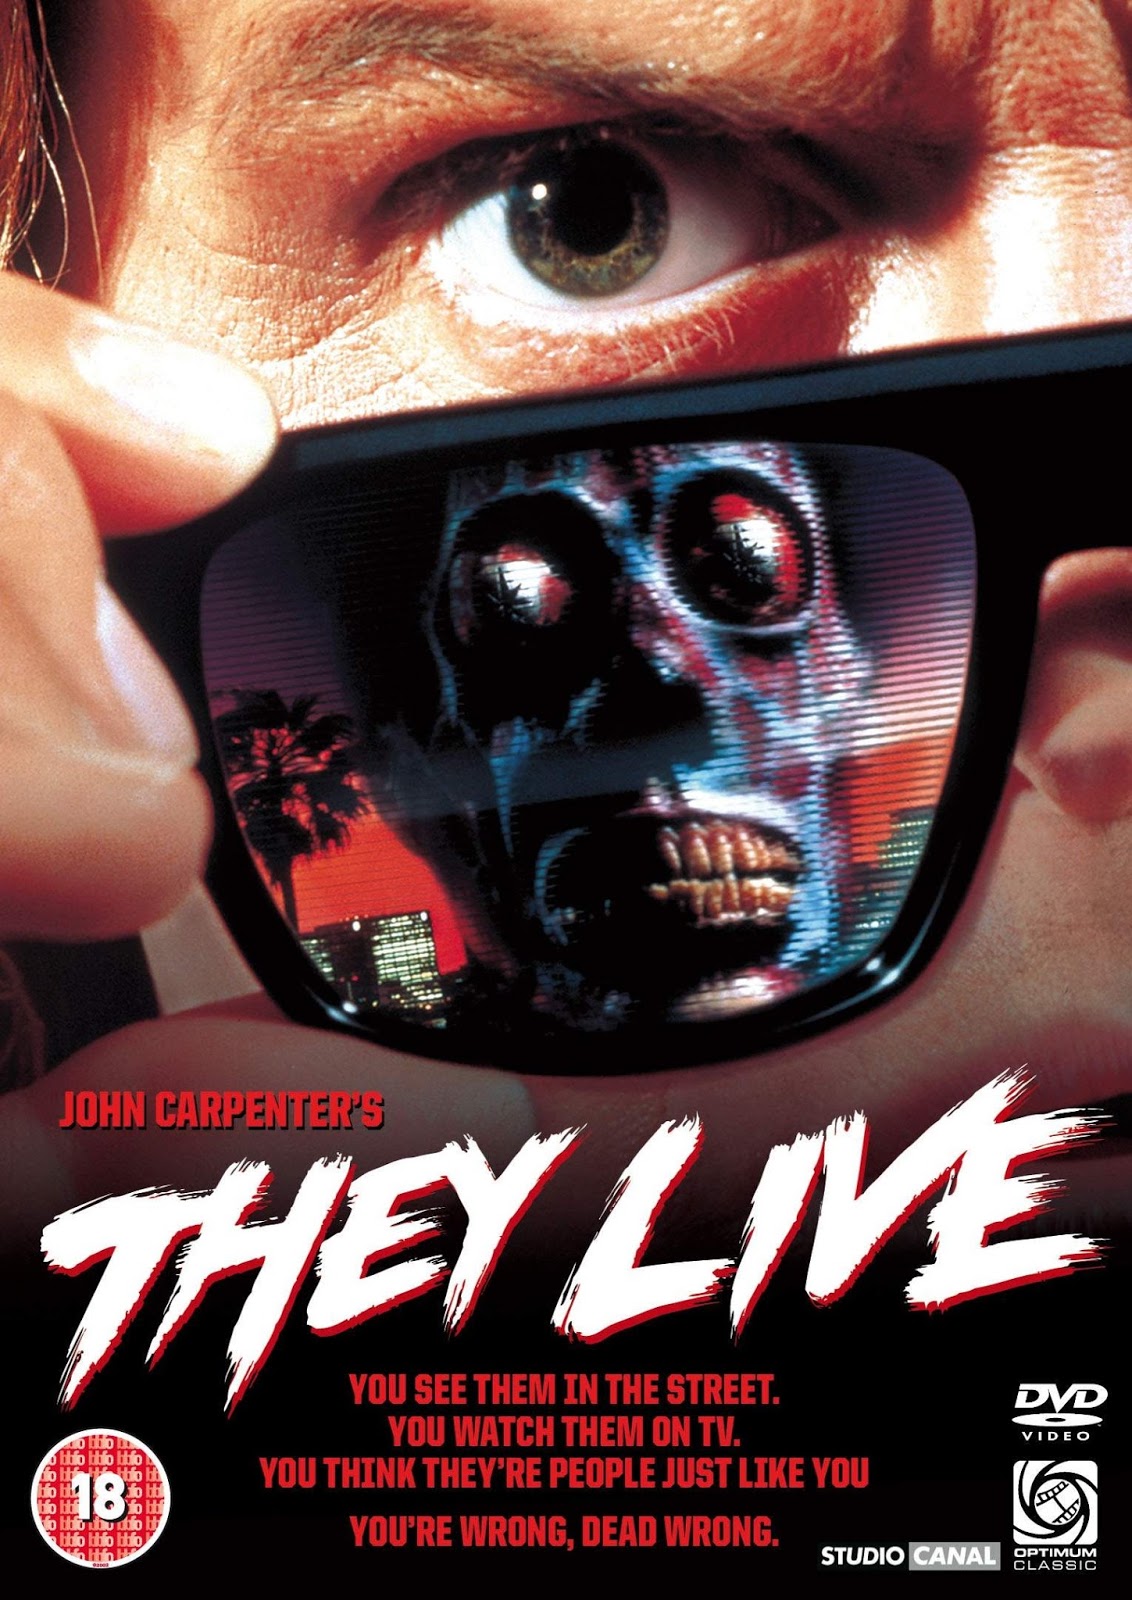 Proyección de la película Están vivos (They Live, 1988), de John Carpenter #Avivament2018